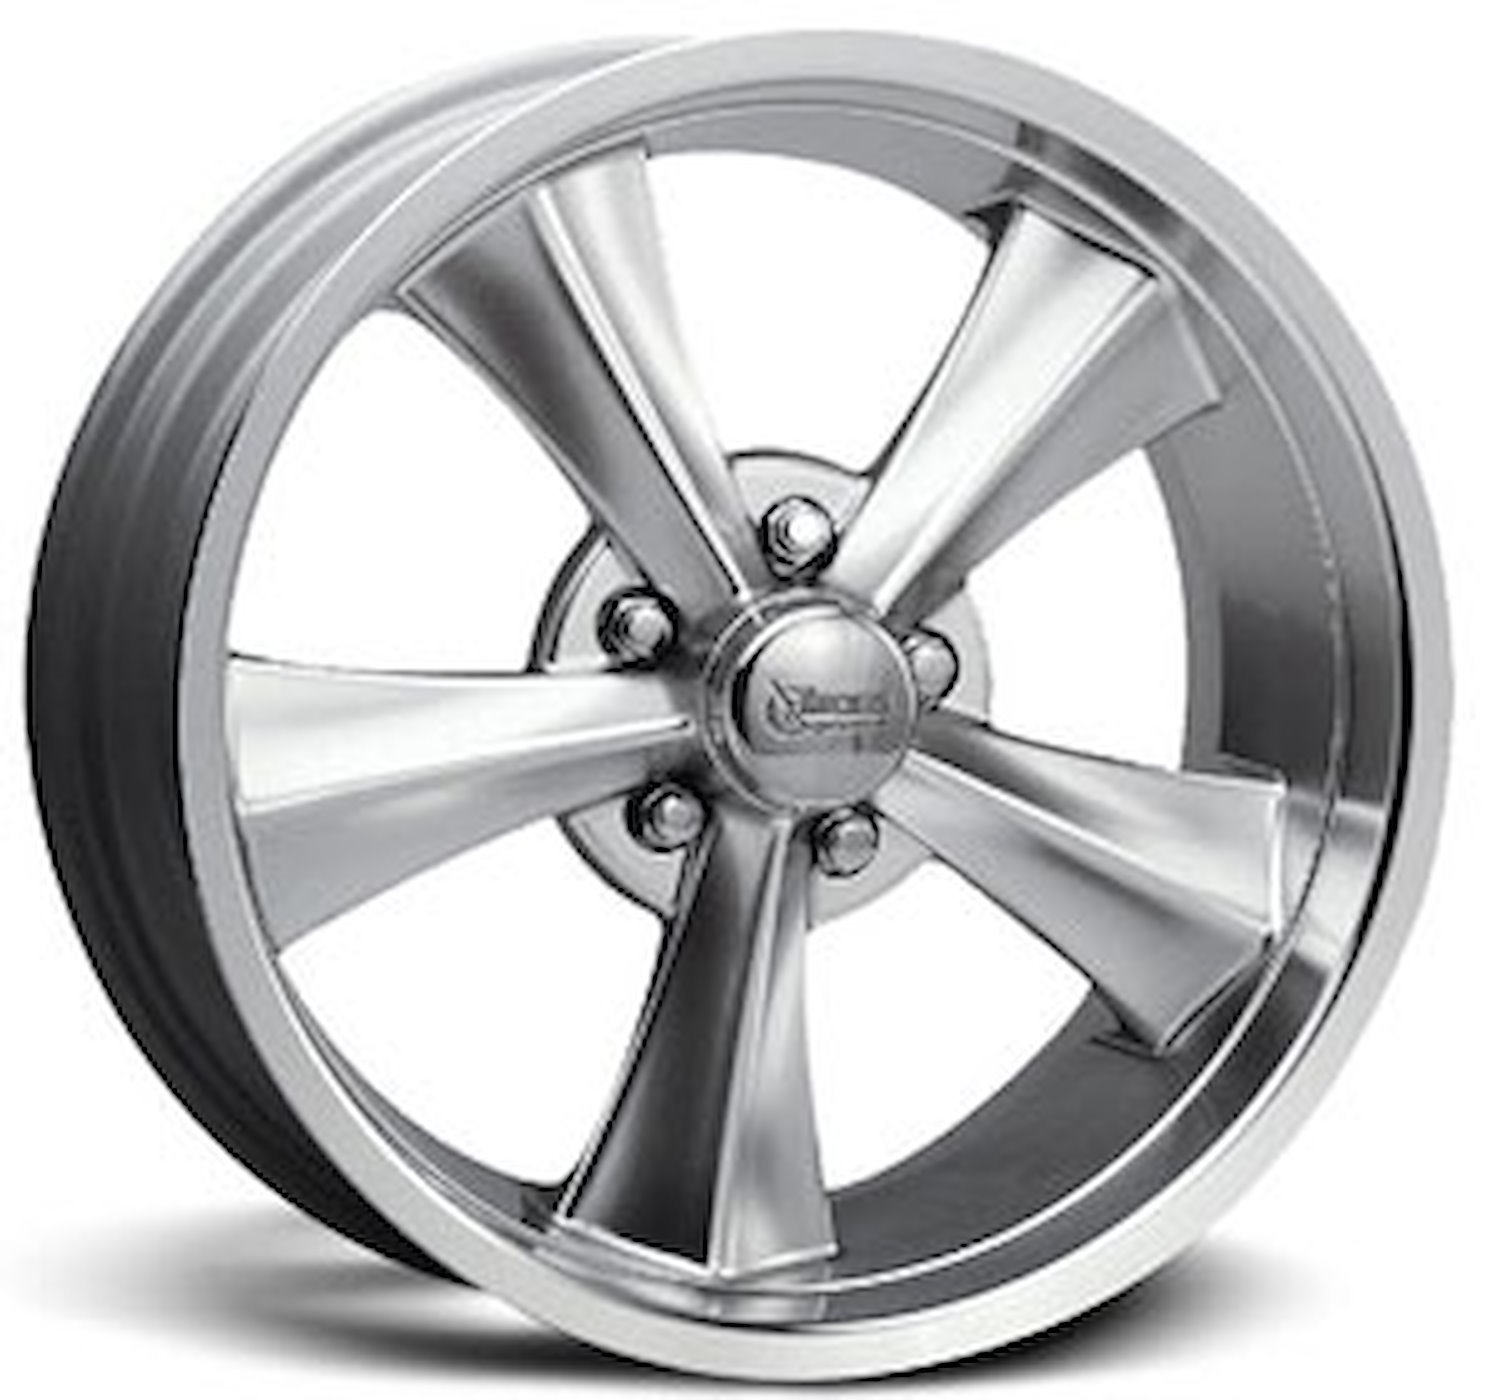 Booster Wheel - Hyper Silver Size: 17" x 7"